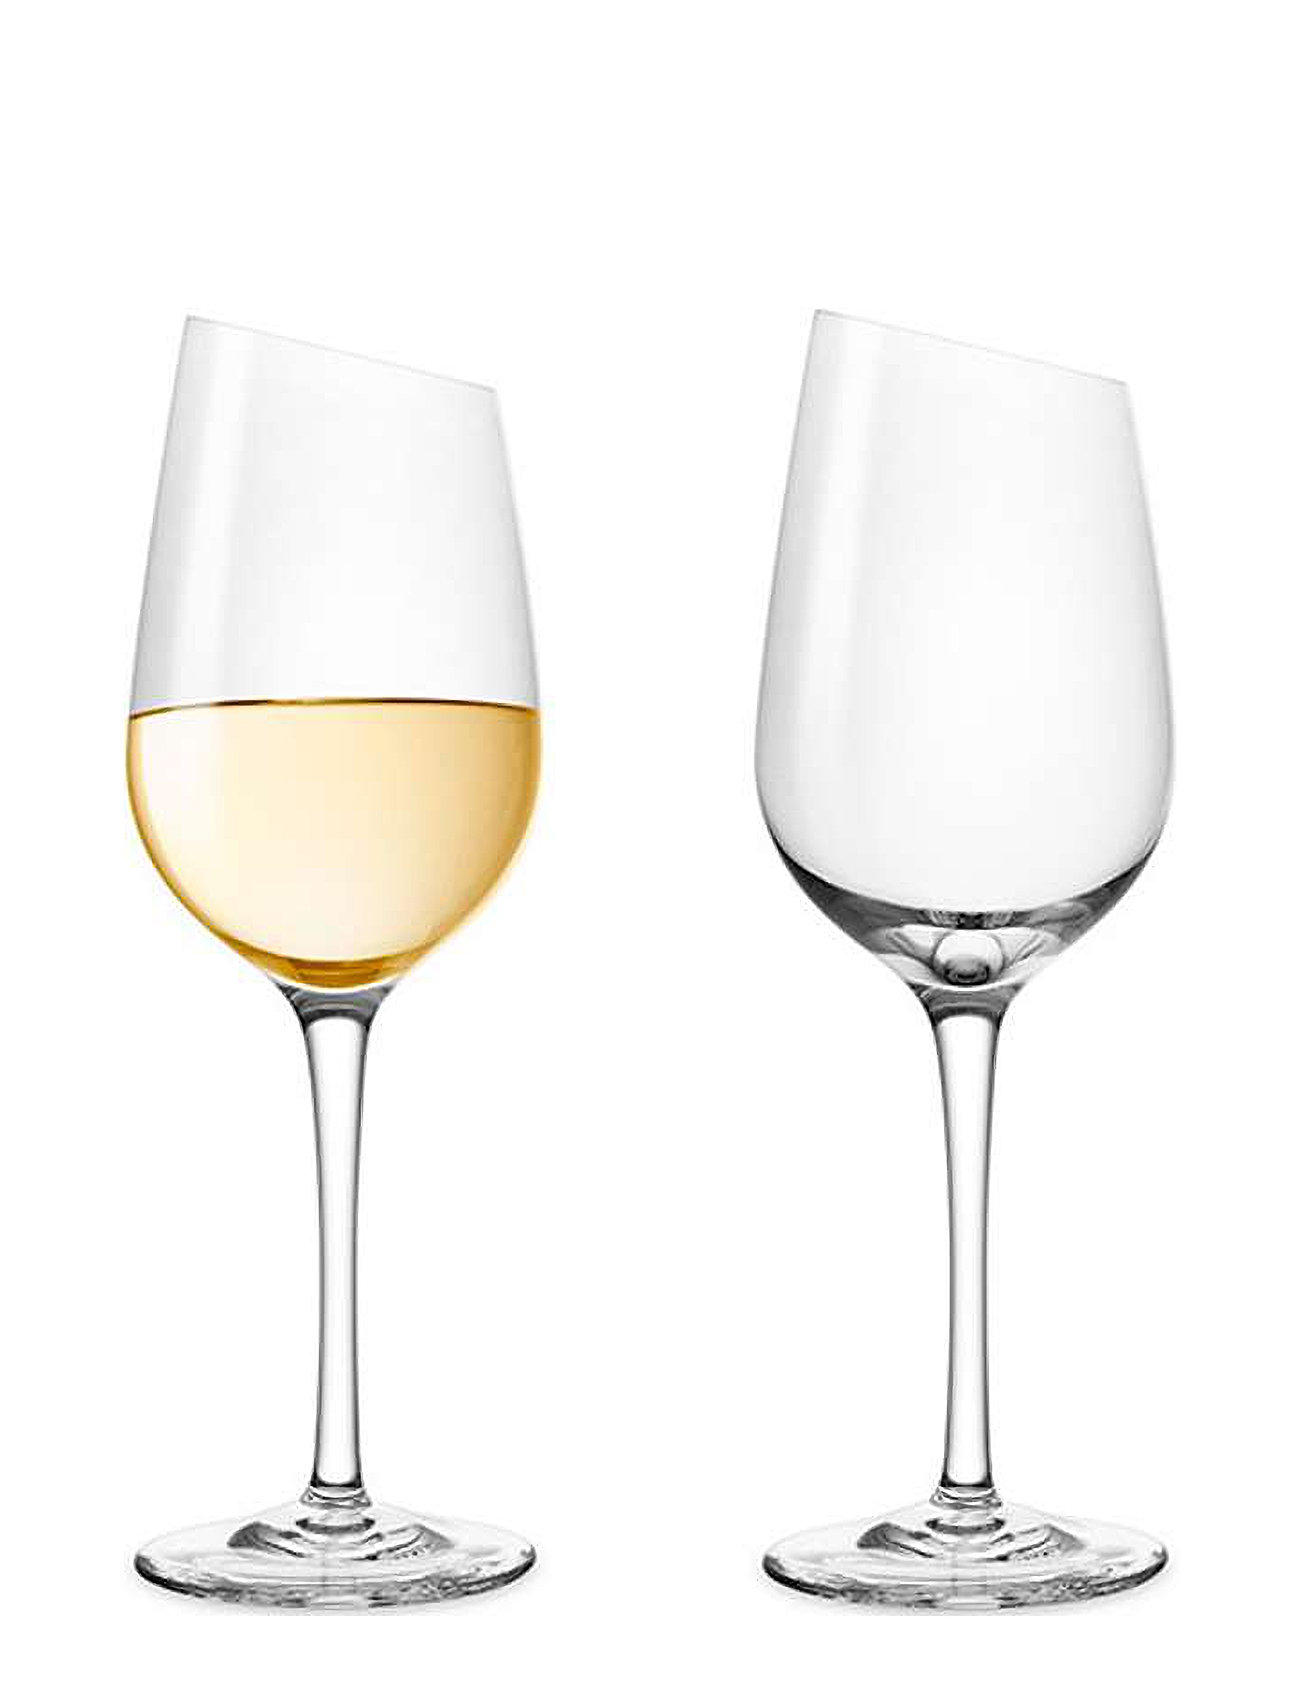 2 Pk. Vinglas Riesling Home Tableware Glass Wine Glass White Wine Glasses Nude Eva Solo